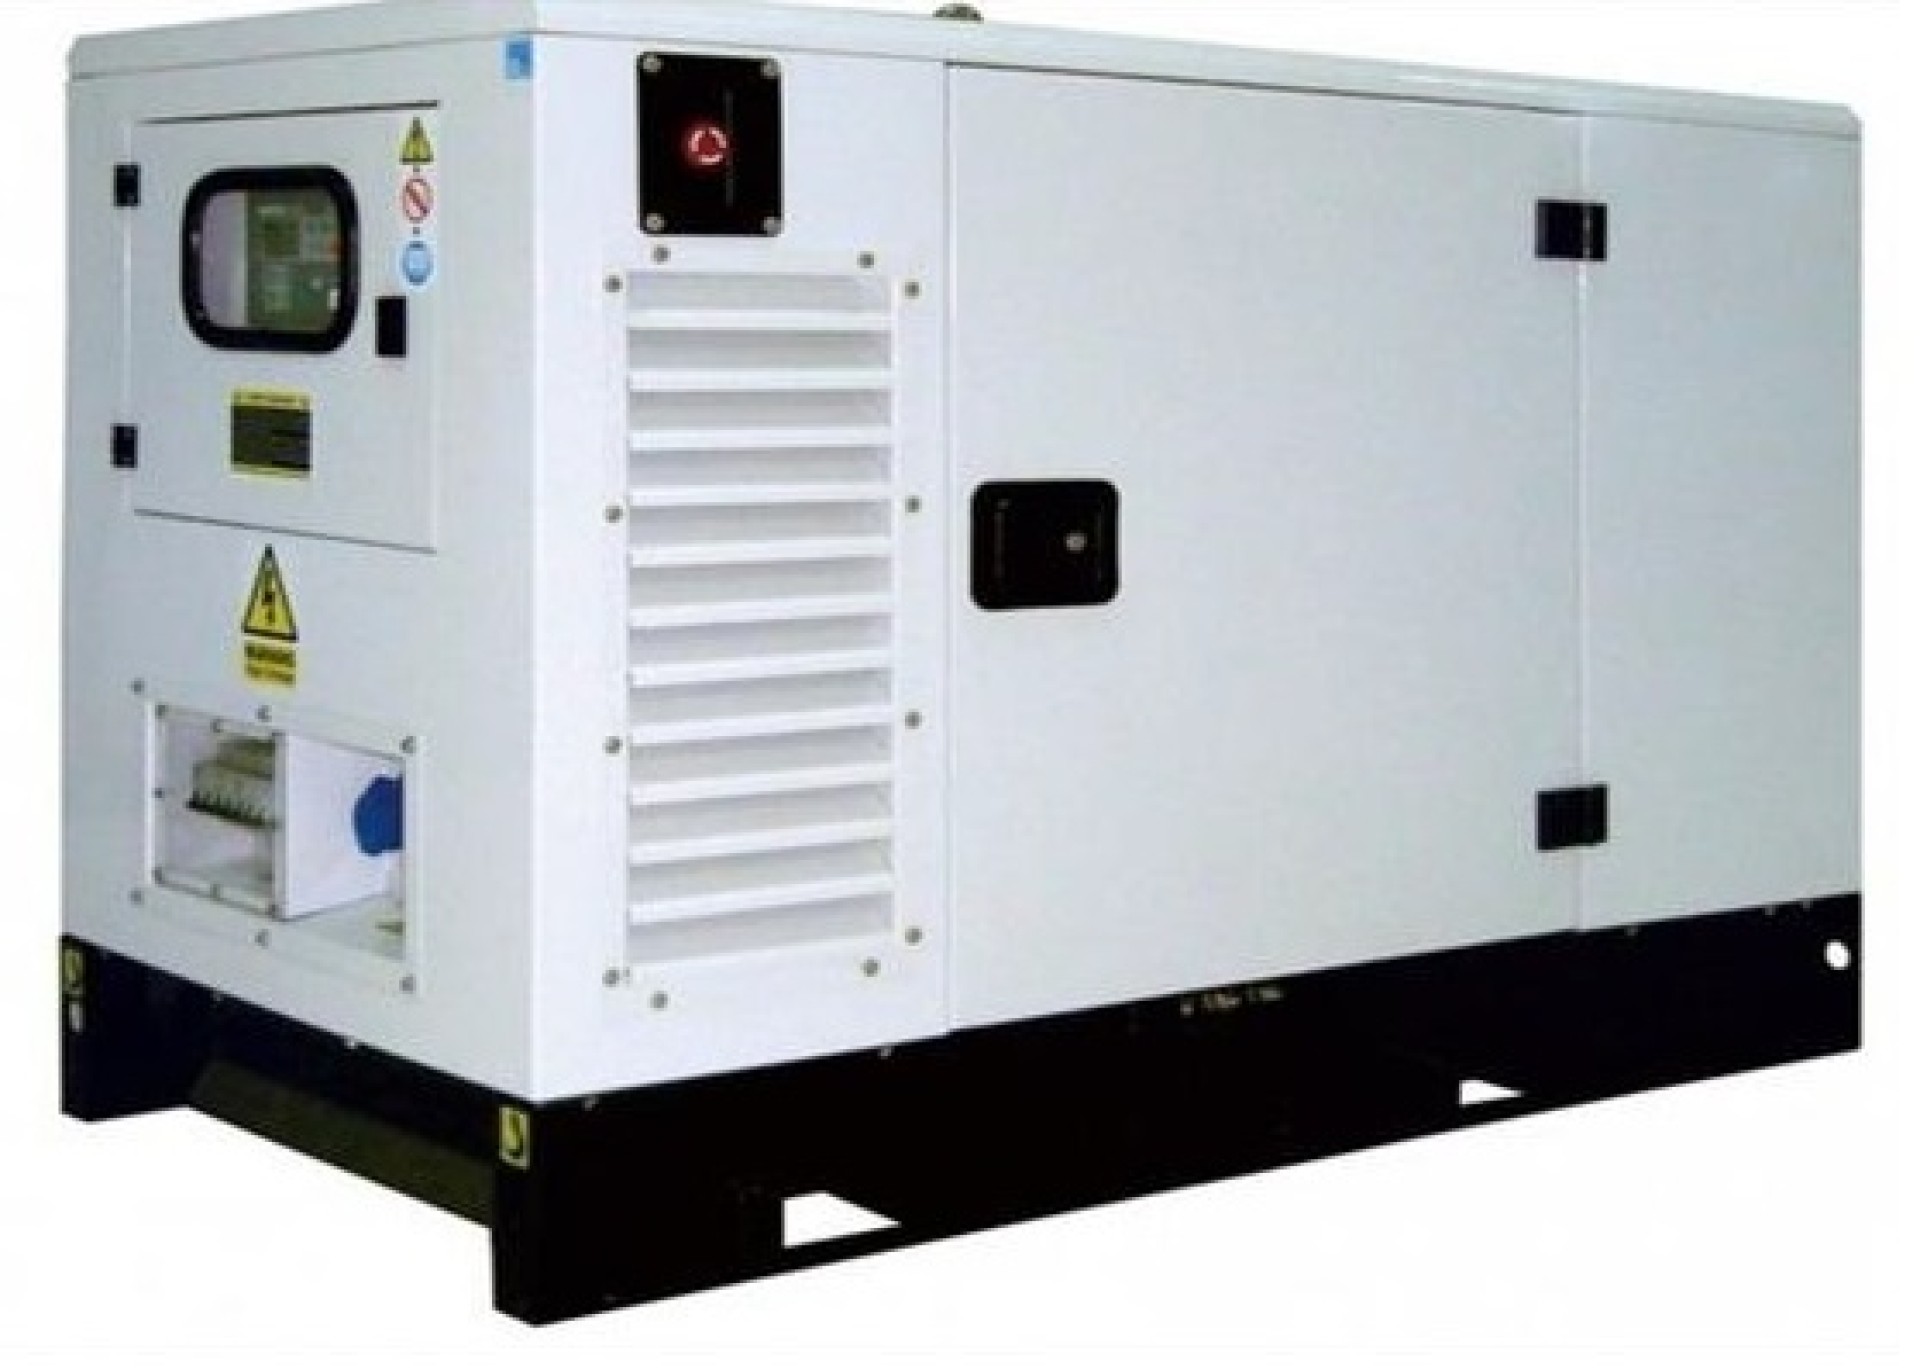 Providing and installing electric generators